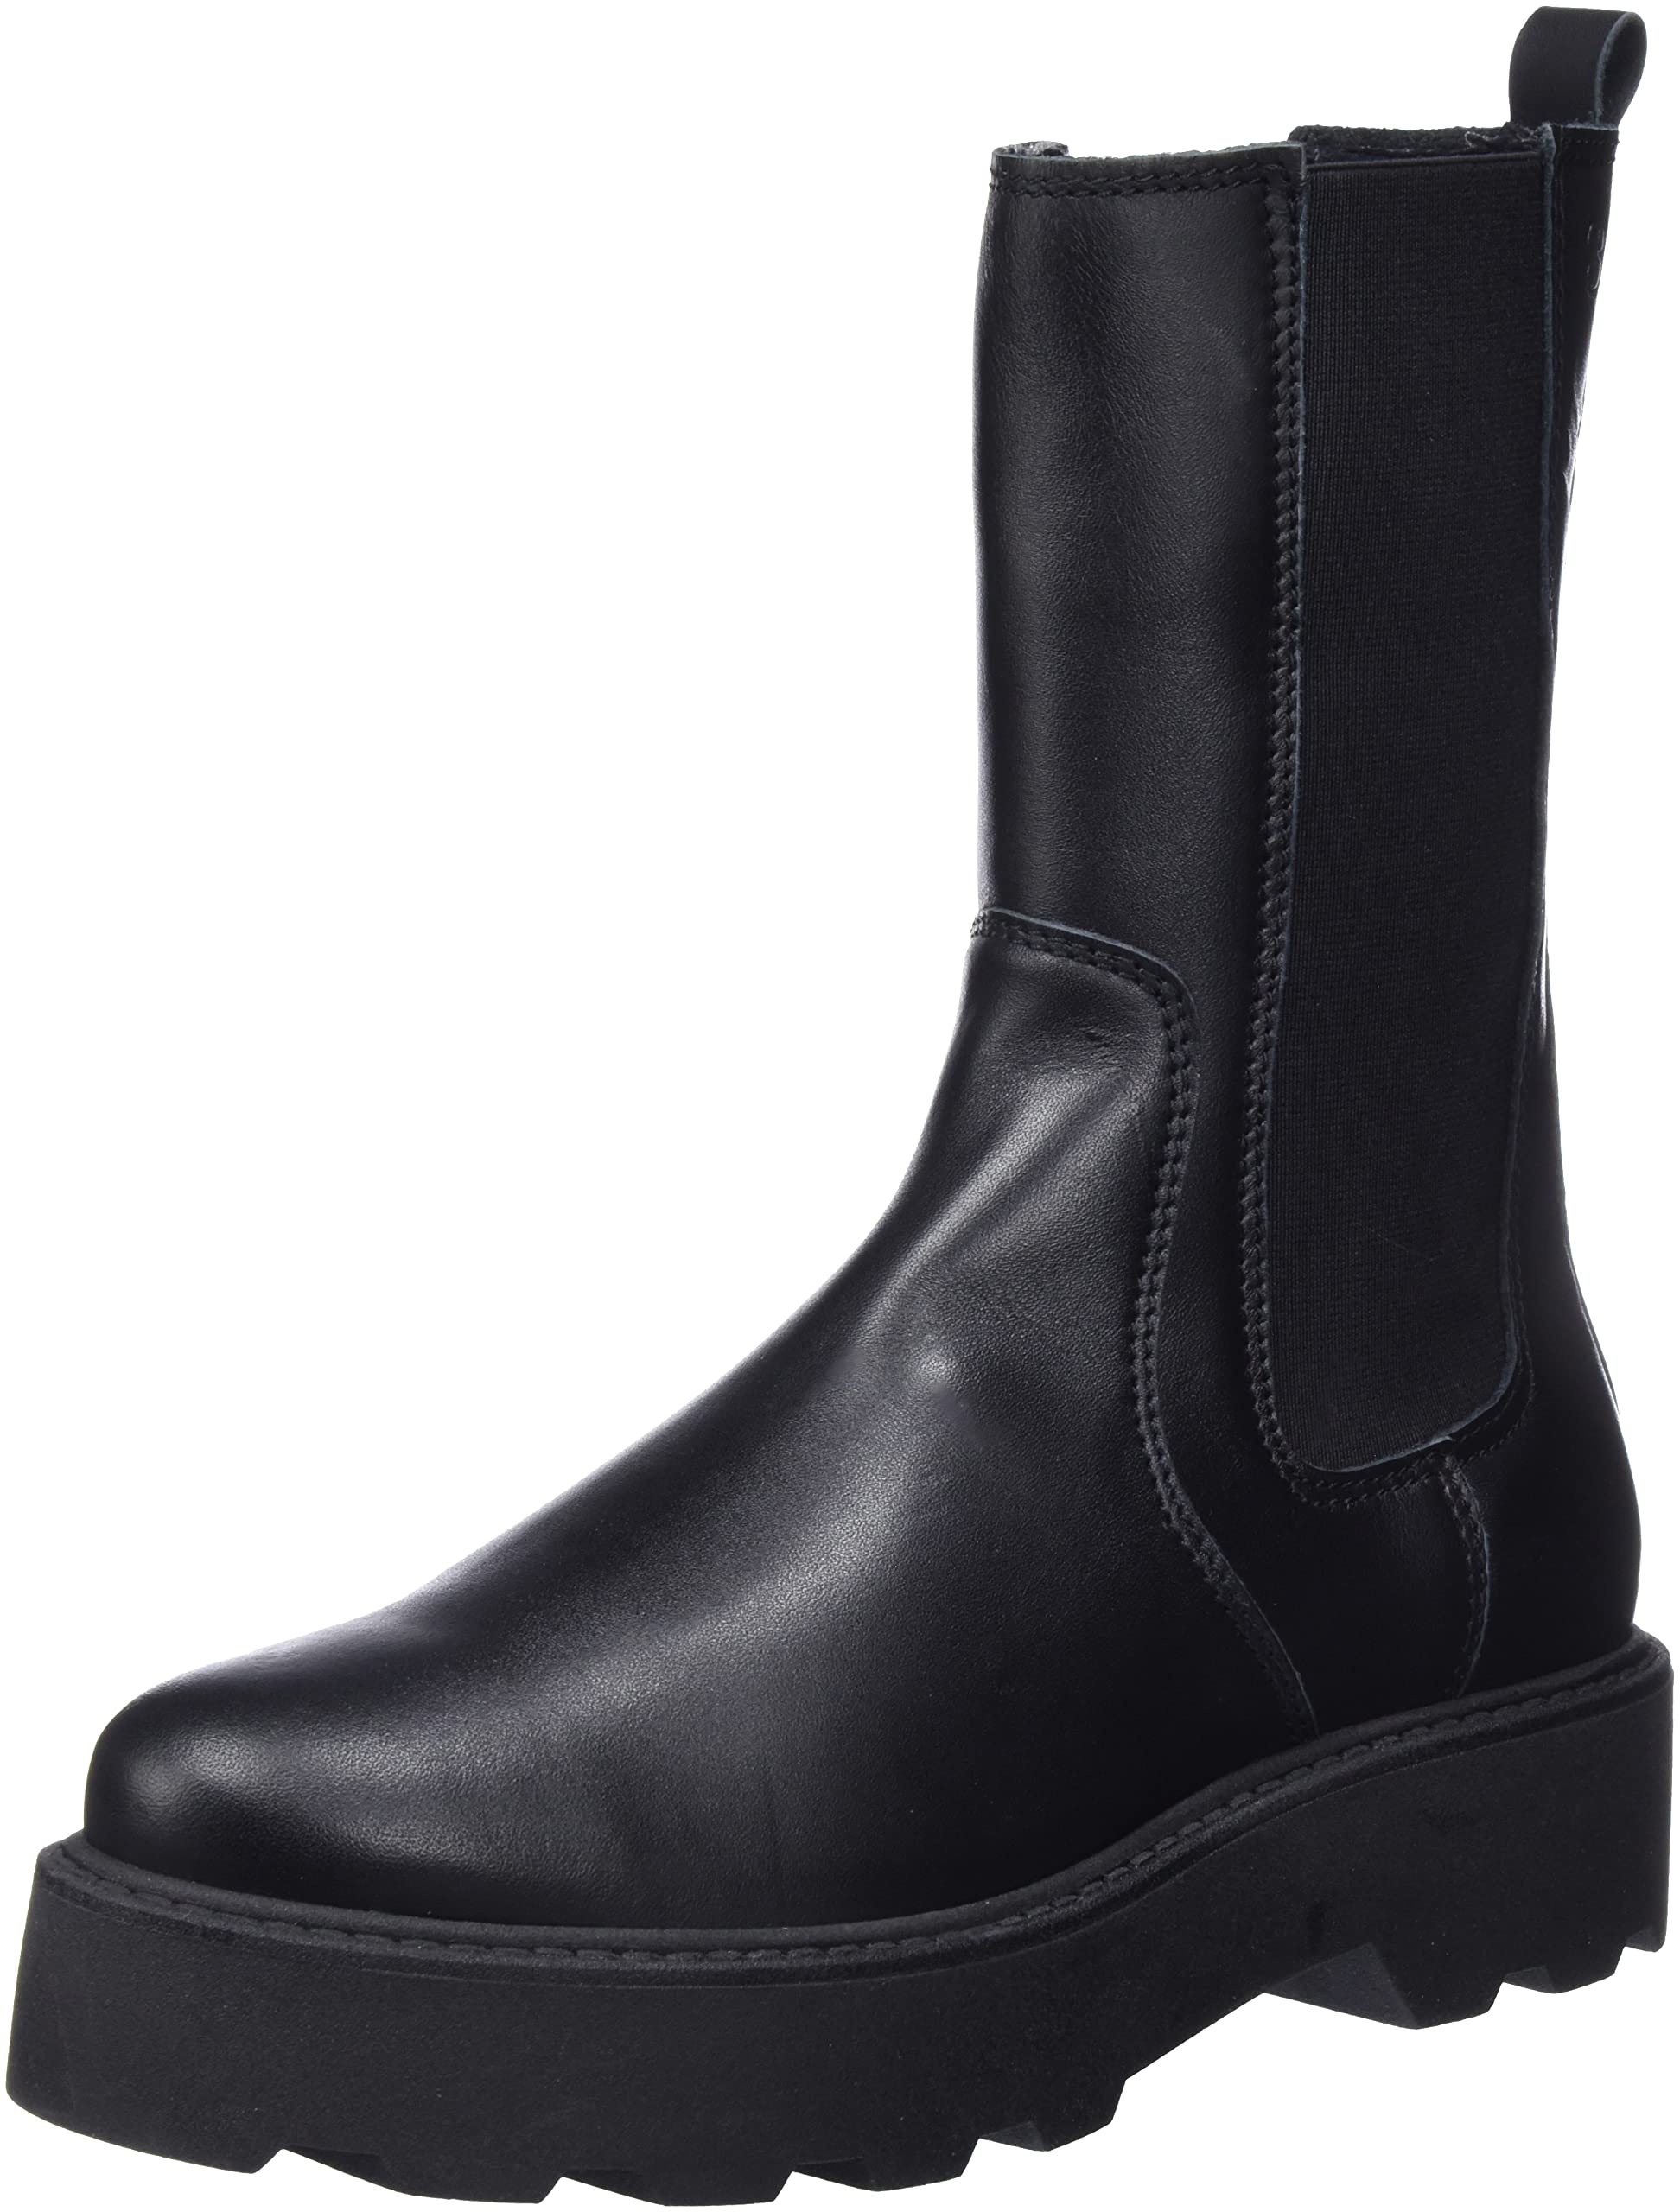 s.Oliver Damen 5-5-25482-37 Chelsea Boot, Black Leather, 41 EU / 9.5 UK